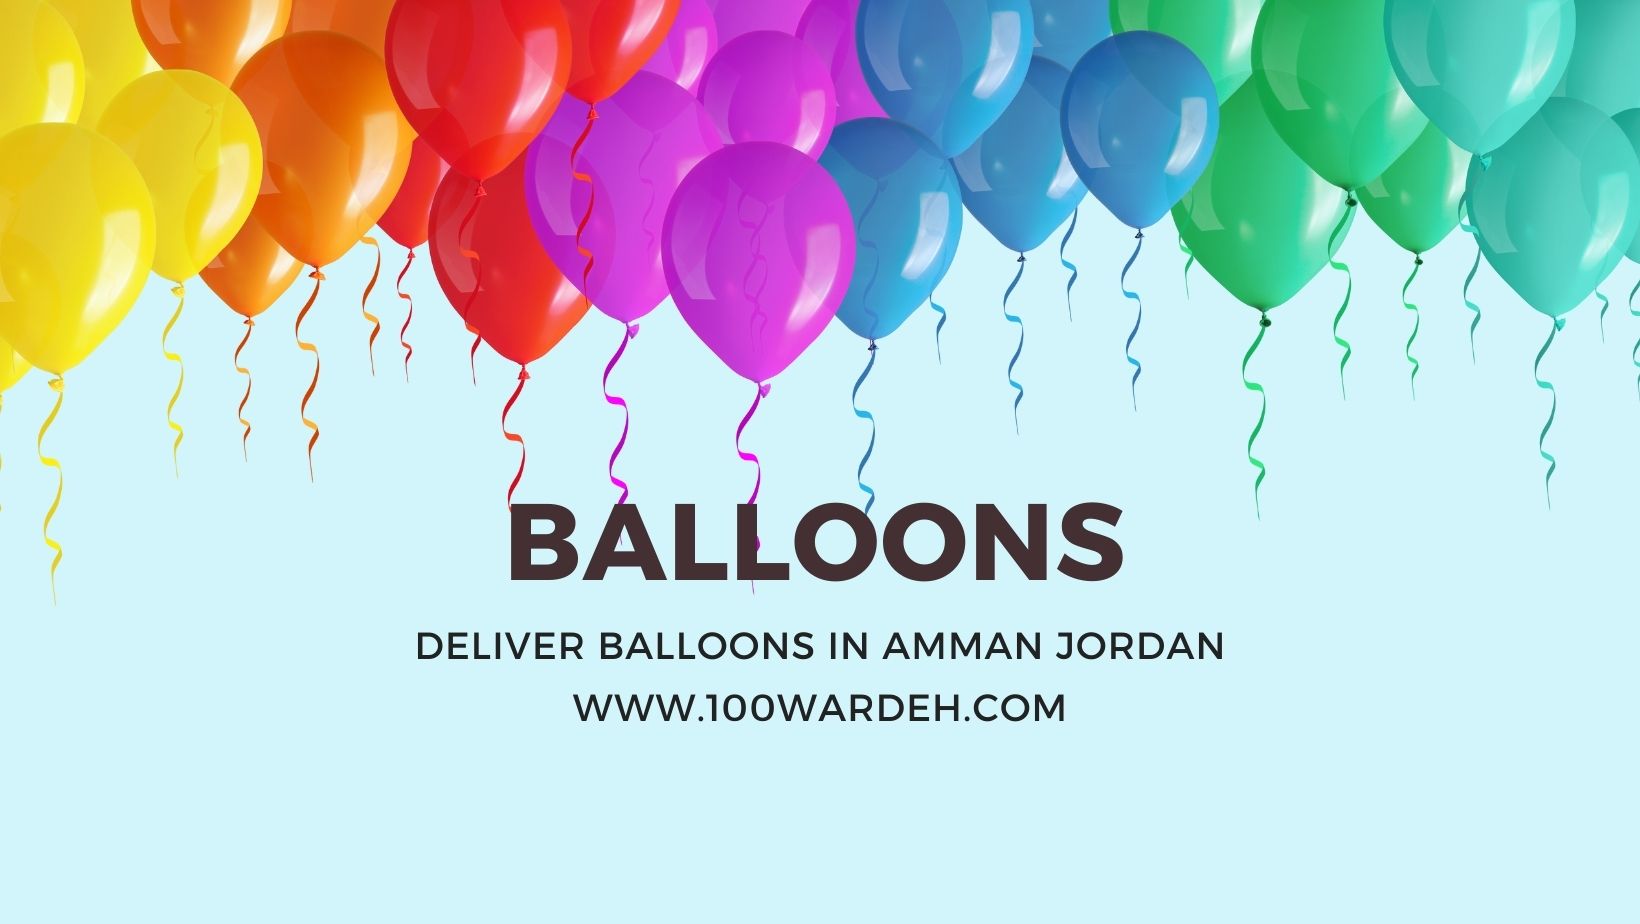 Order balloons online and deliver in Amman Jordan